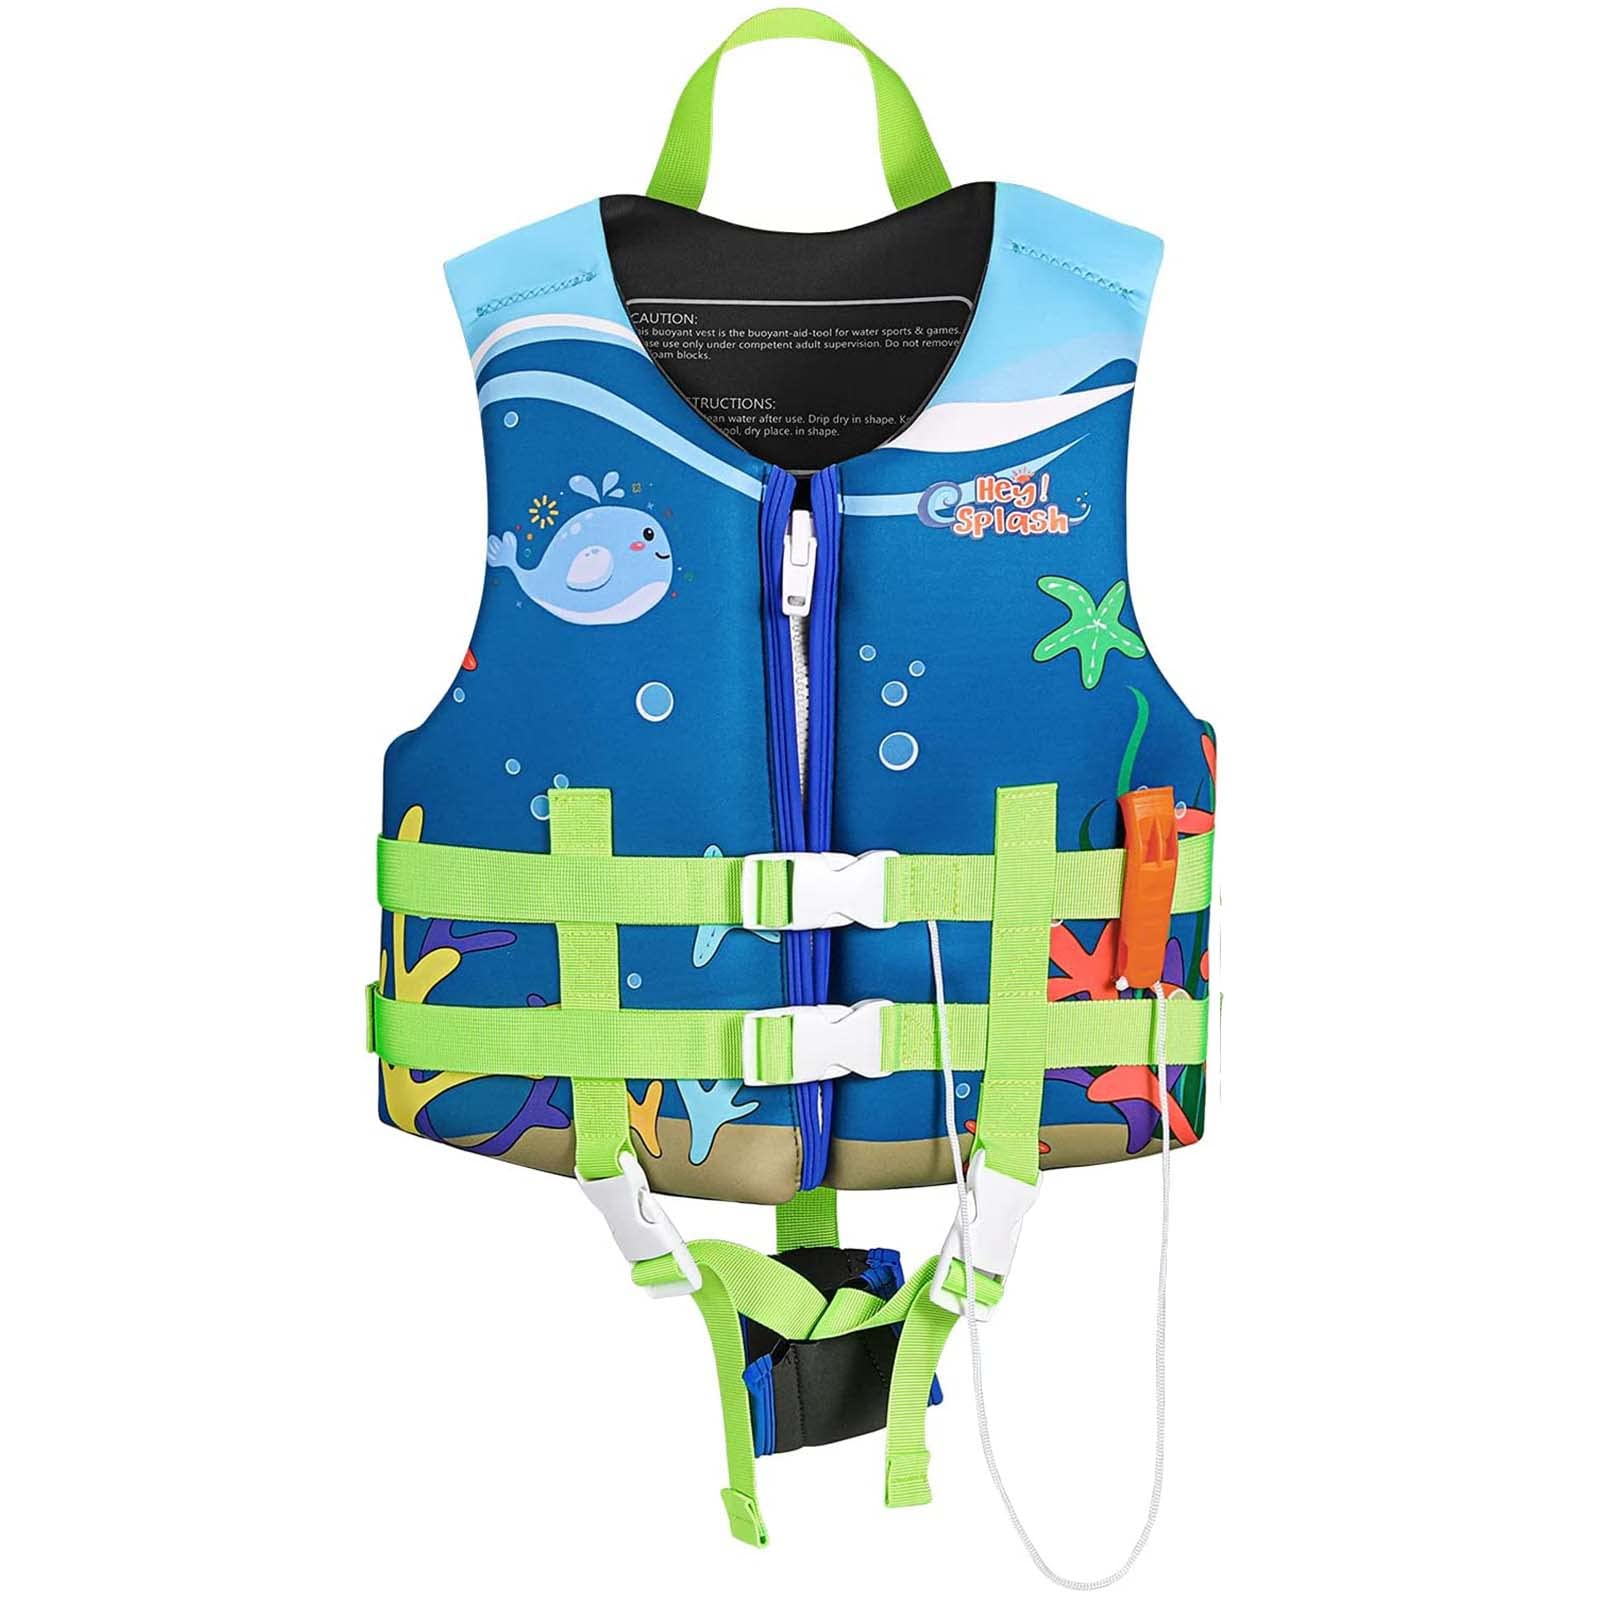 HeySplash Swim Vest for Kids, Kids Swim Vest Watersports Child Size Toddler Floatie Trainer Vest with Survival Whistle, Easy on 